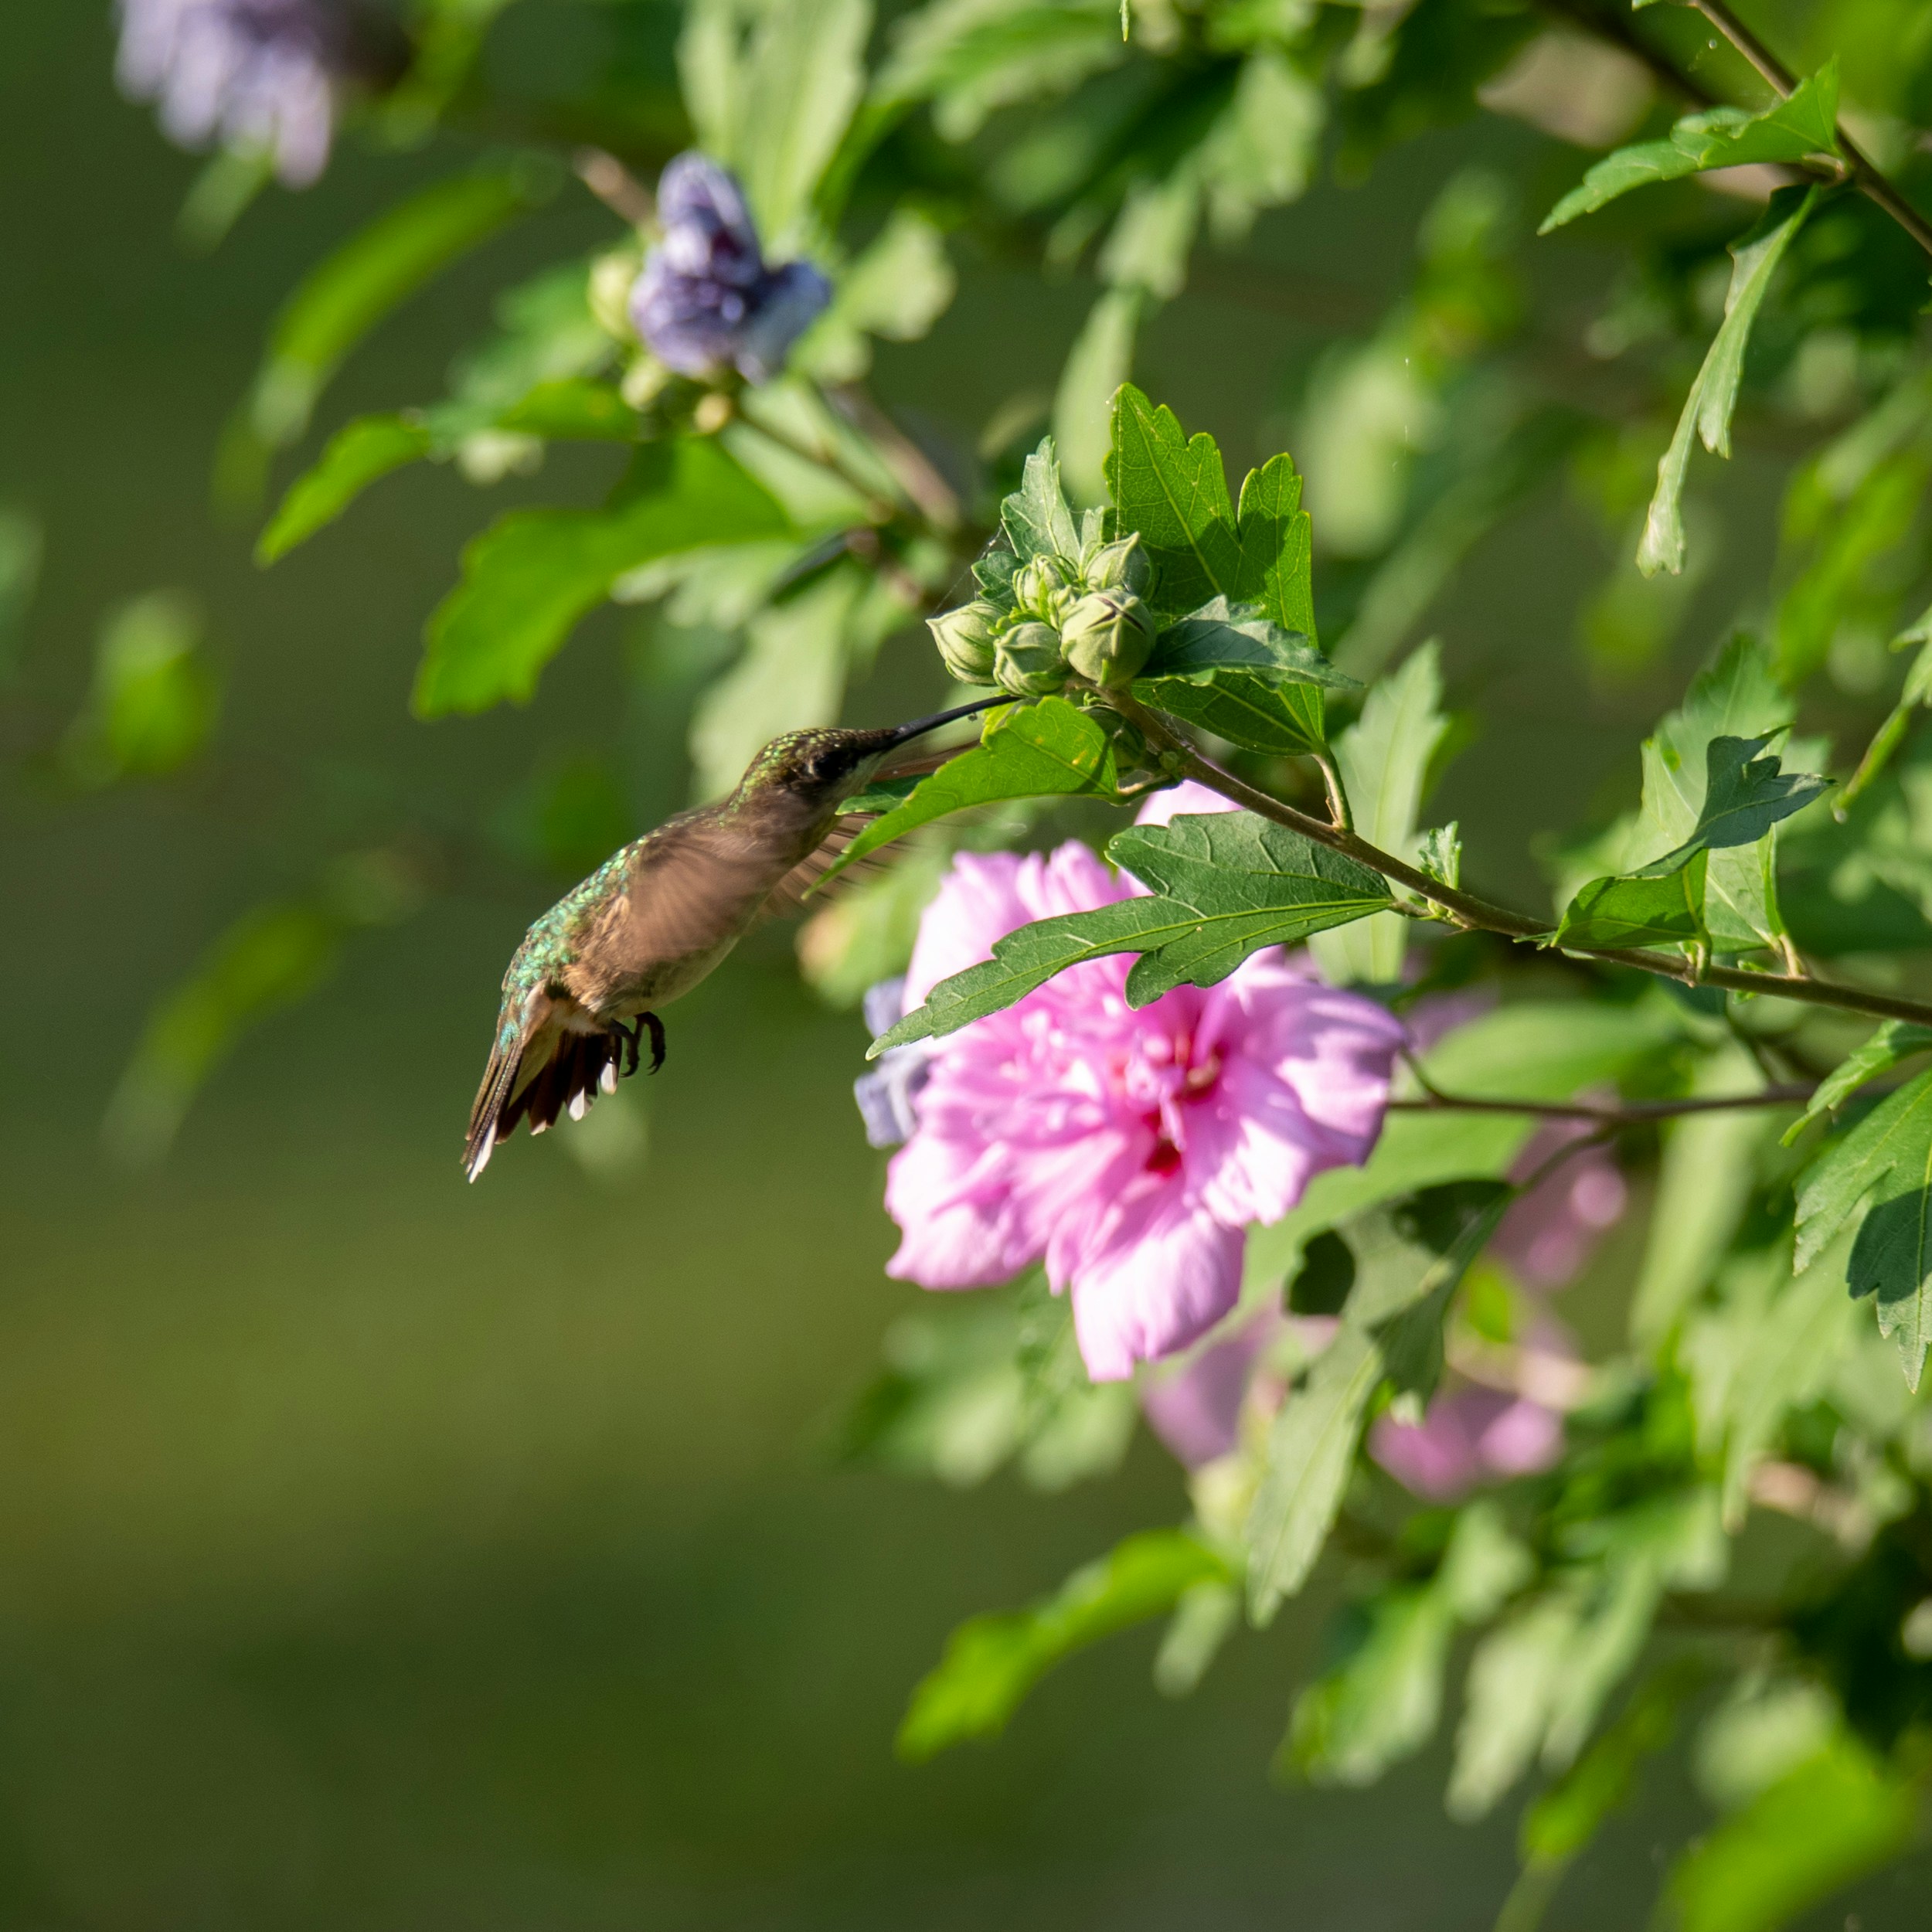 Hummingbird drinking nectar from a flower.